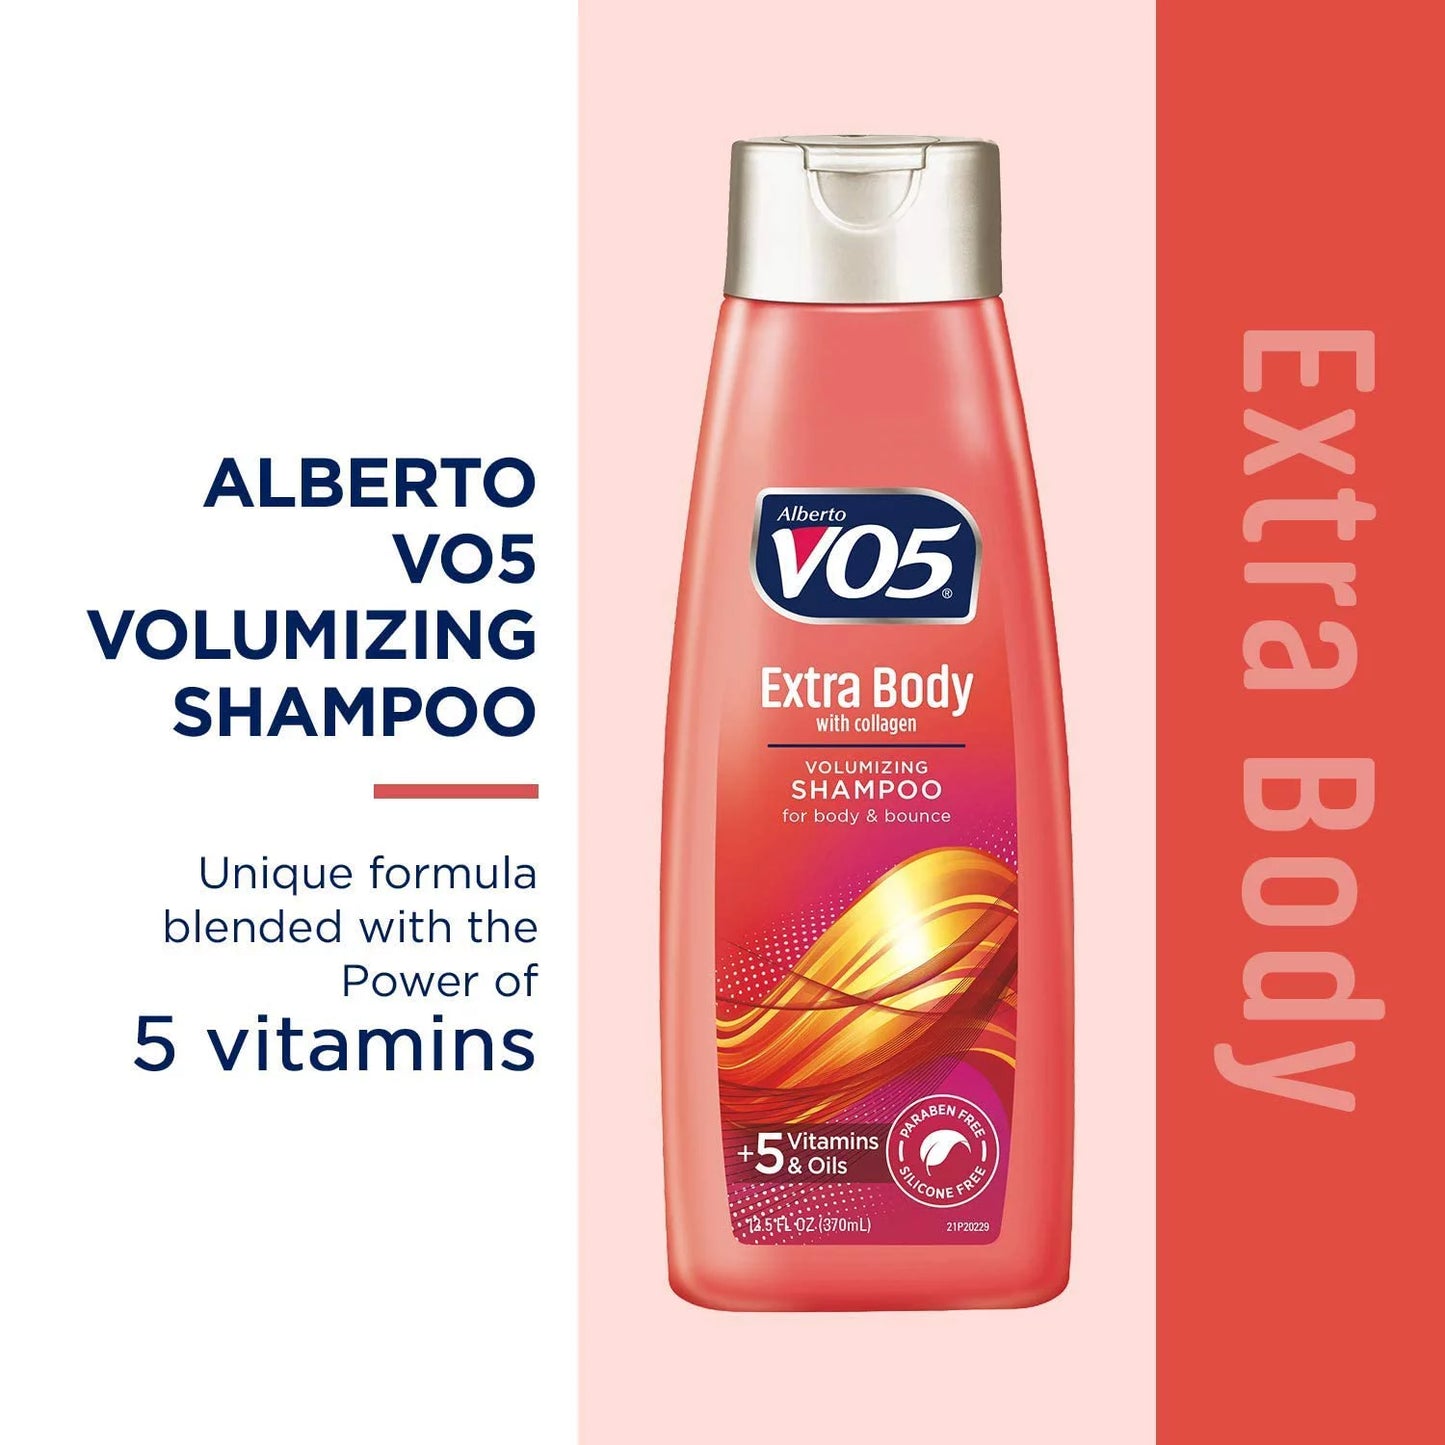 VO5 - Extra Body with collagen - Shampoo - 15 FL OZ (443 ML ) Large Size